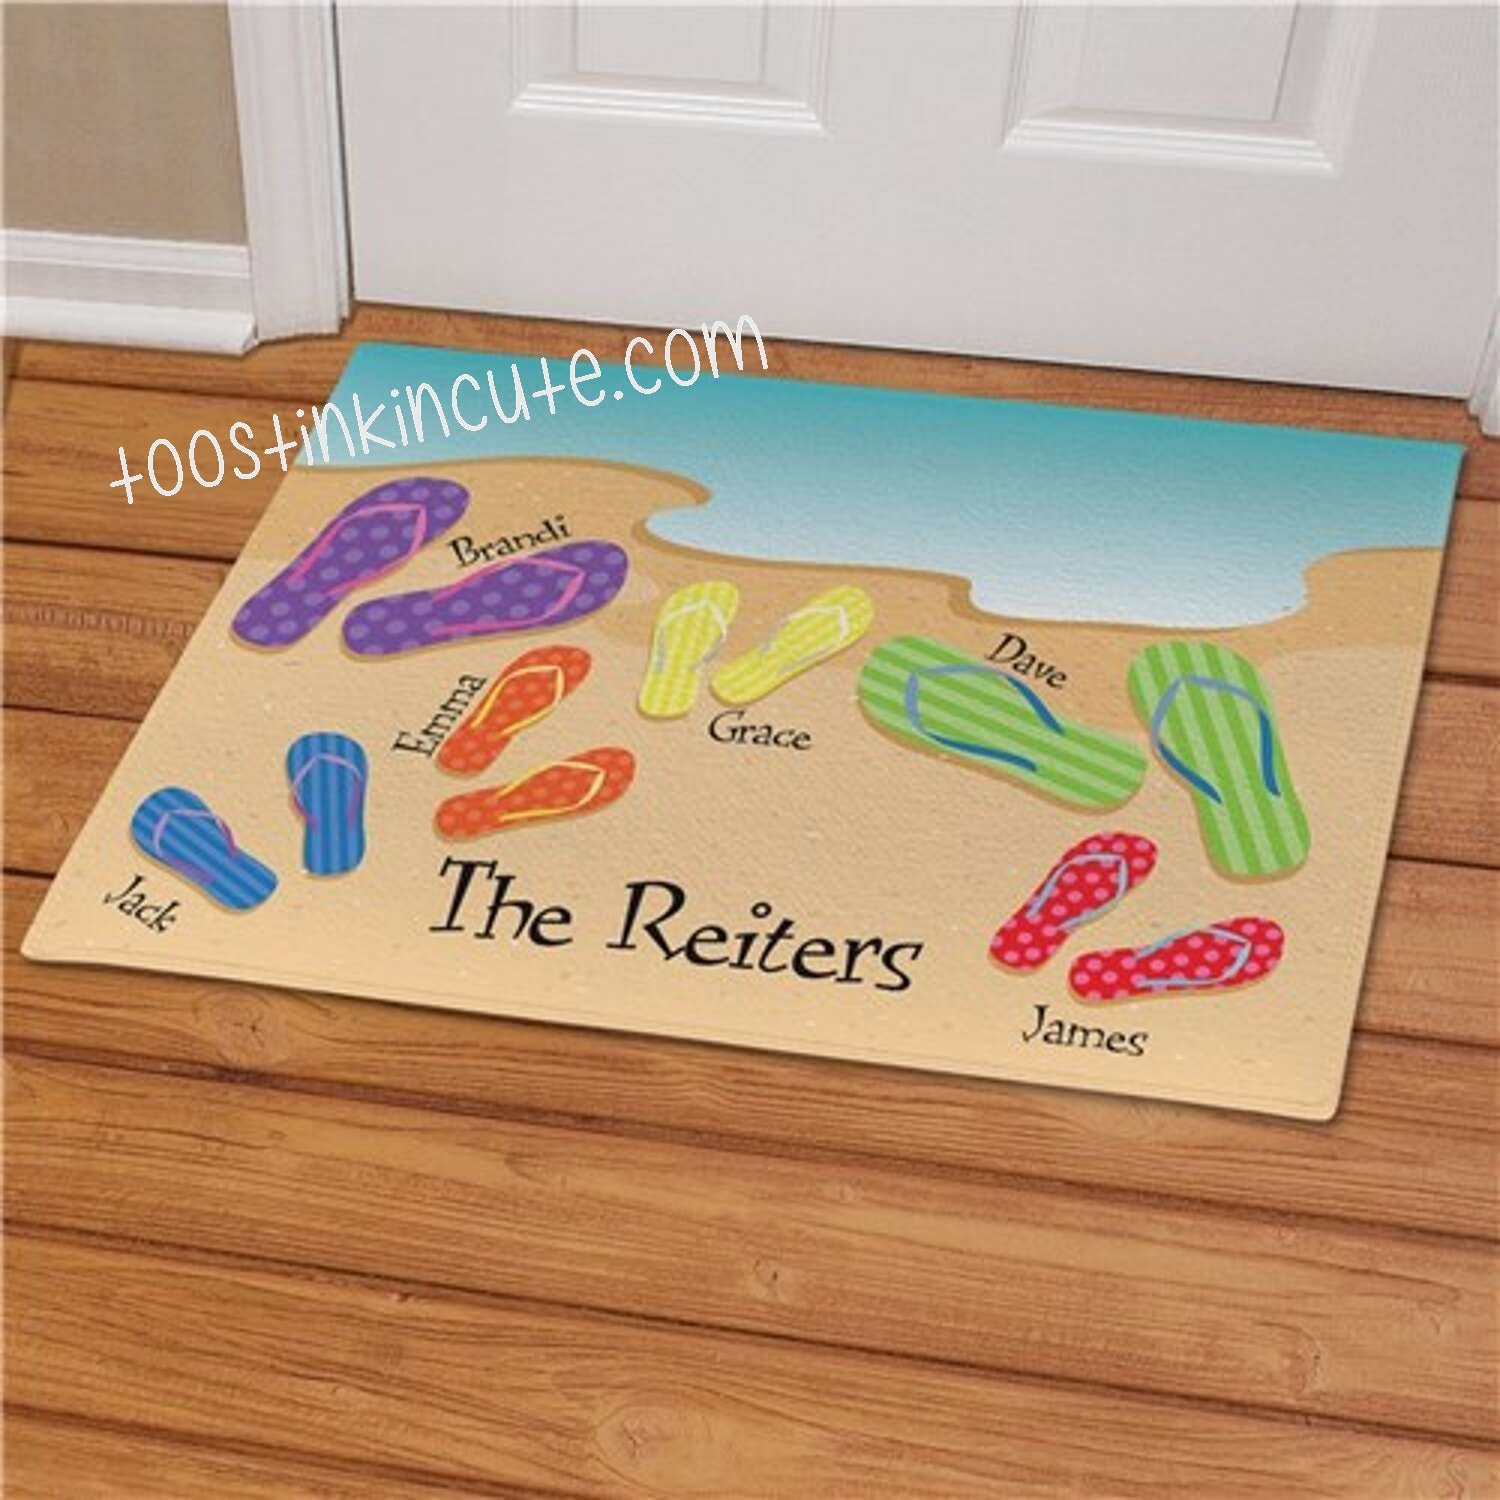 Summer Flip Flop Family Personalized Doormat